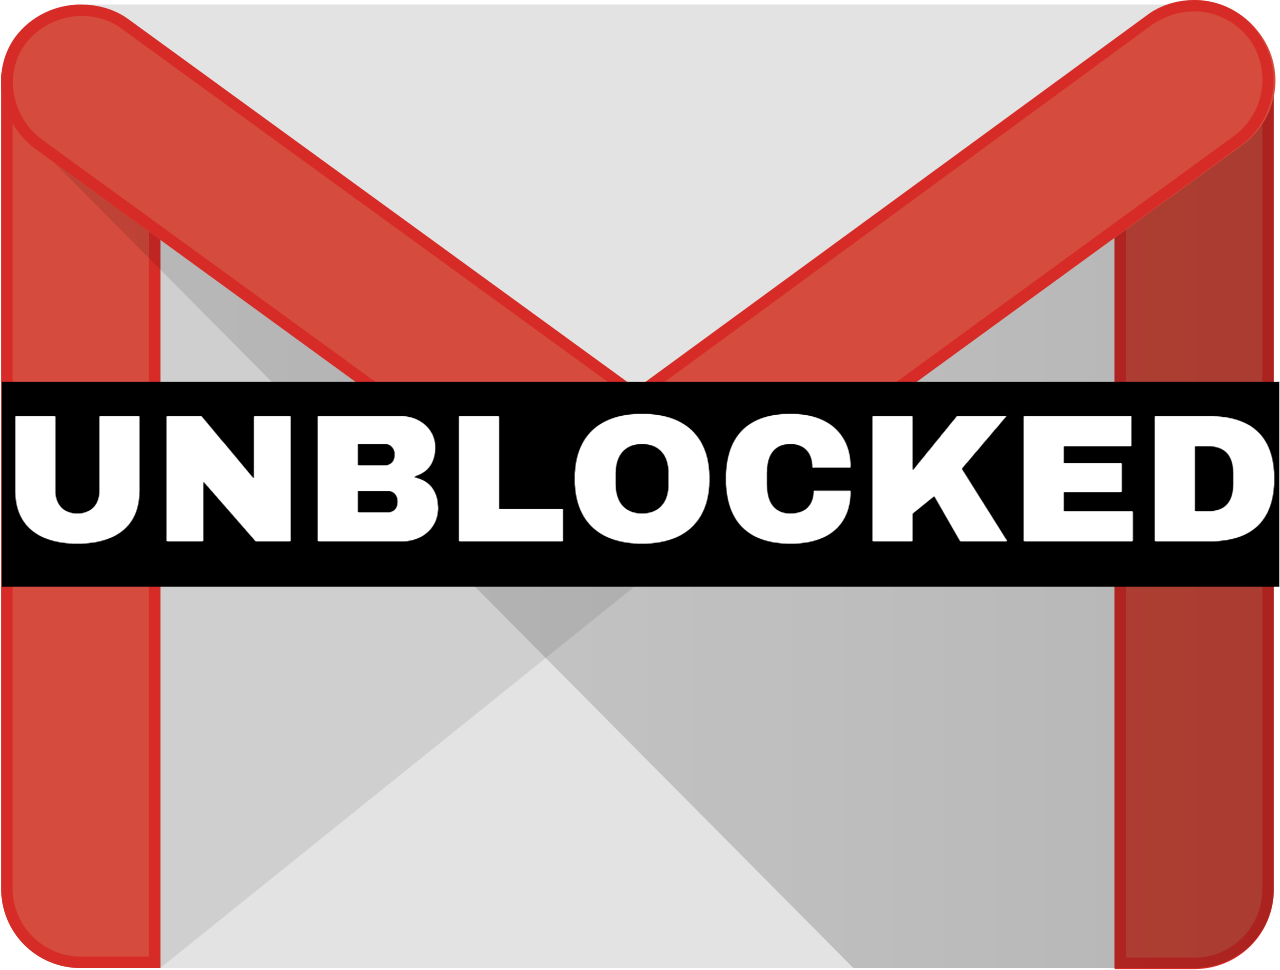 unblock gmail account image